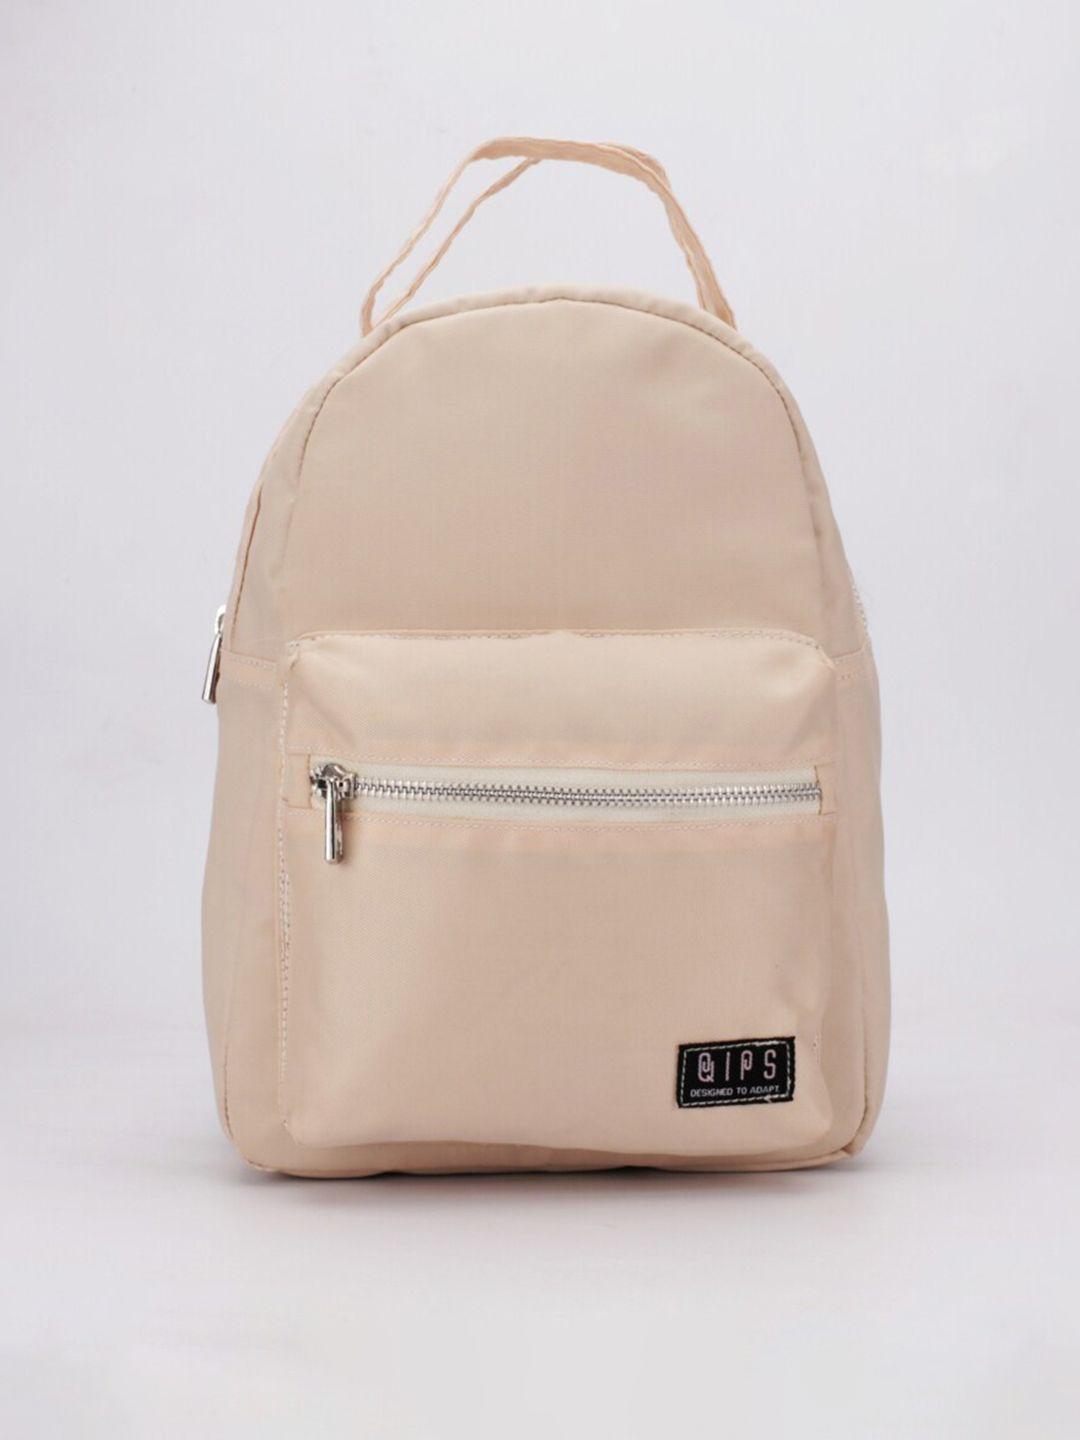 qips women cream-coloured brand logo backpack